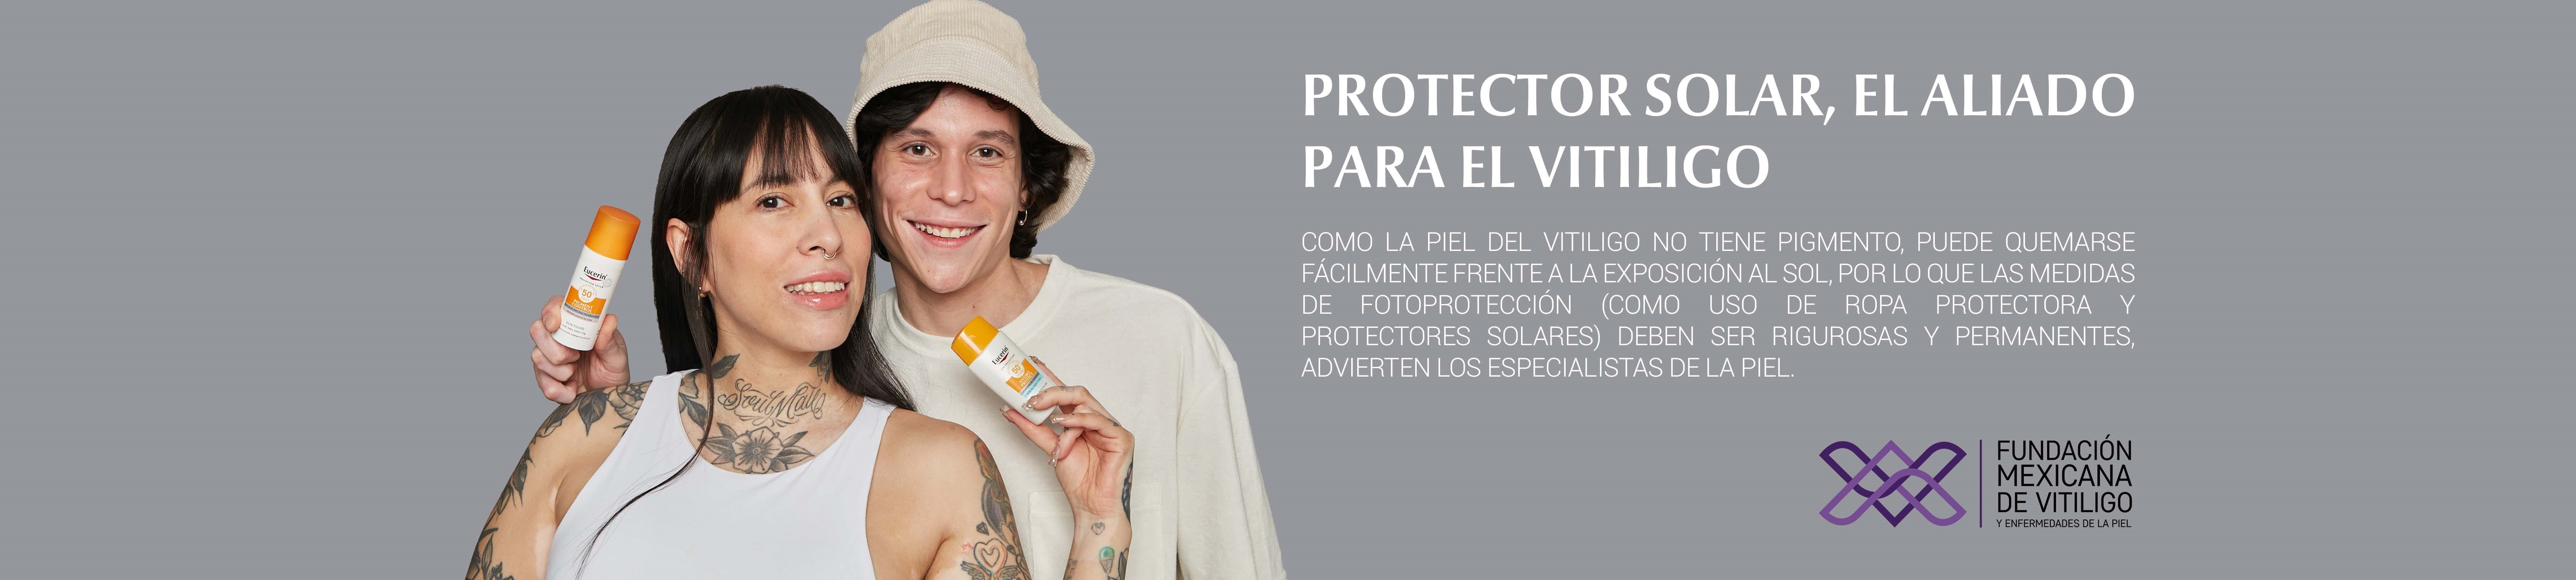 Protector solar, aliado de vitiligo